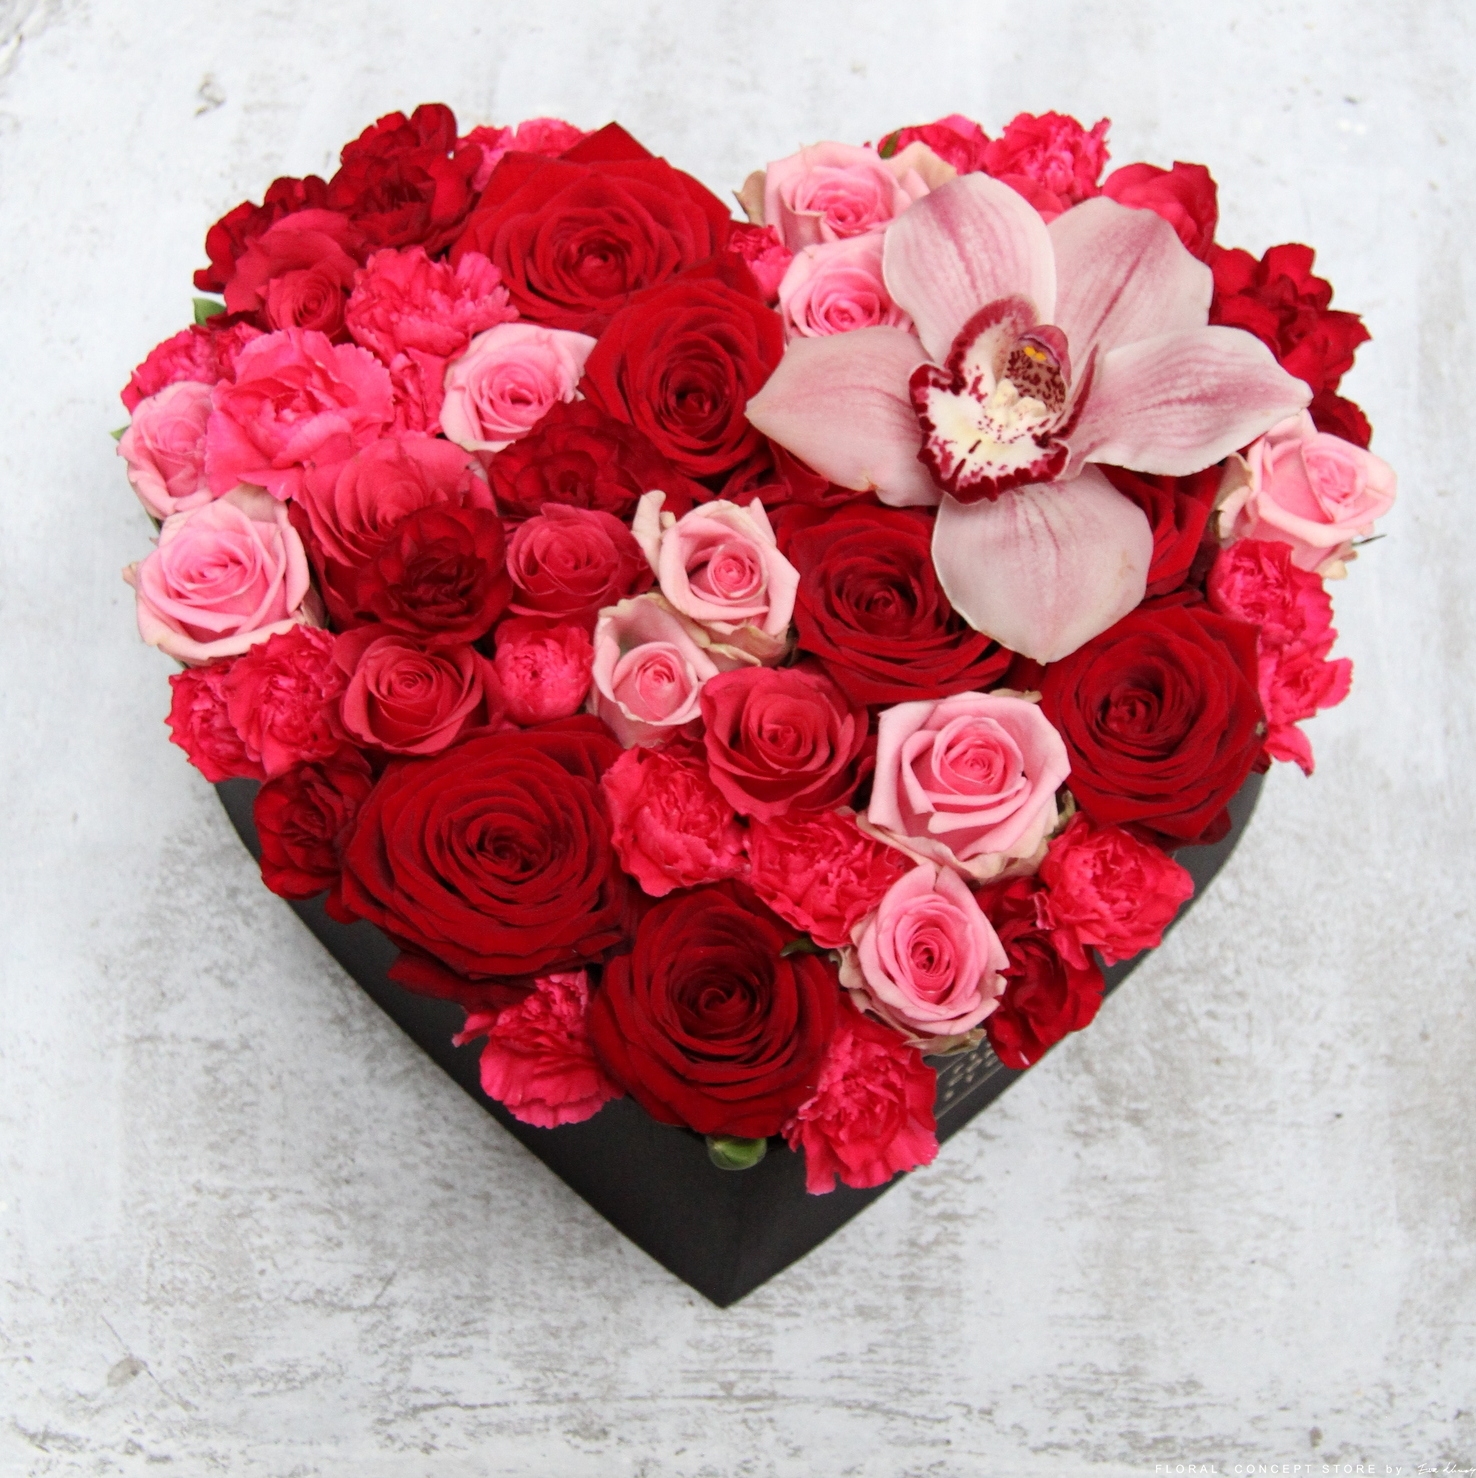 Flower heart made of red roses - flower shop Krakow | Floral Concept ...